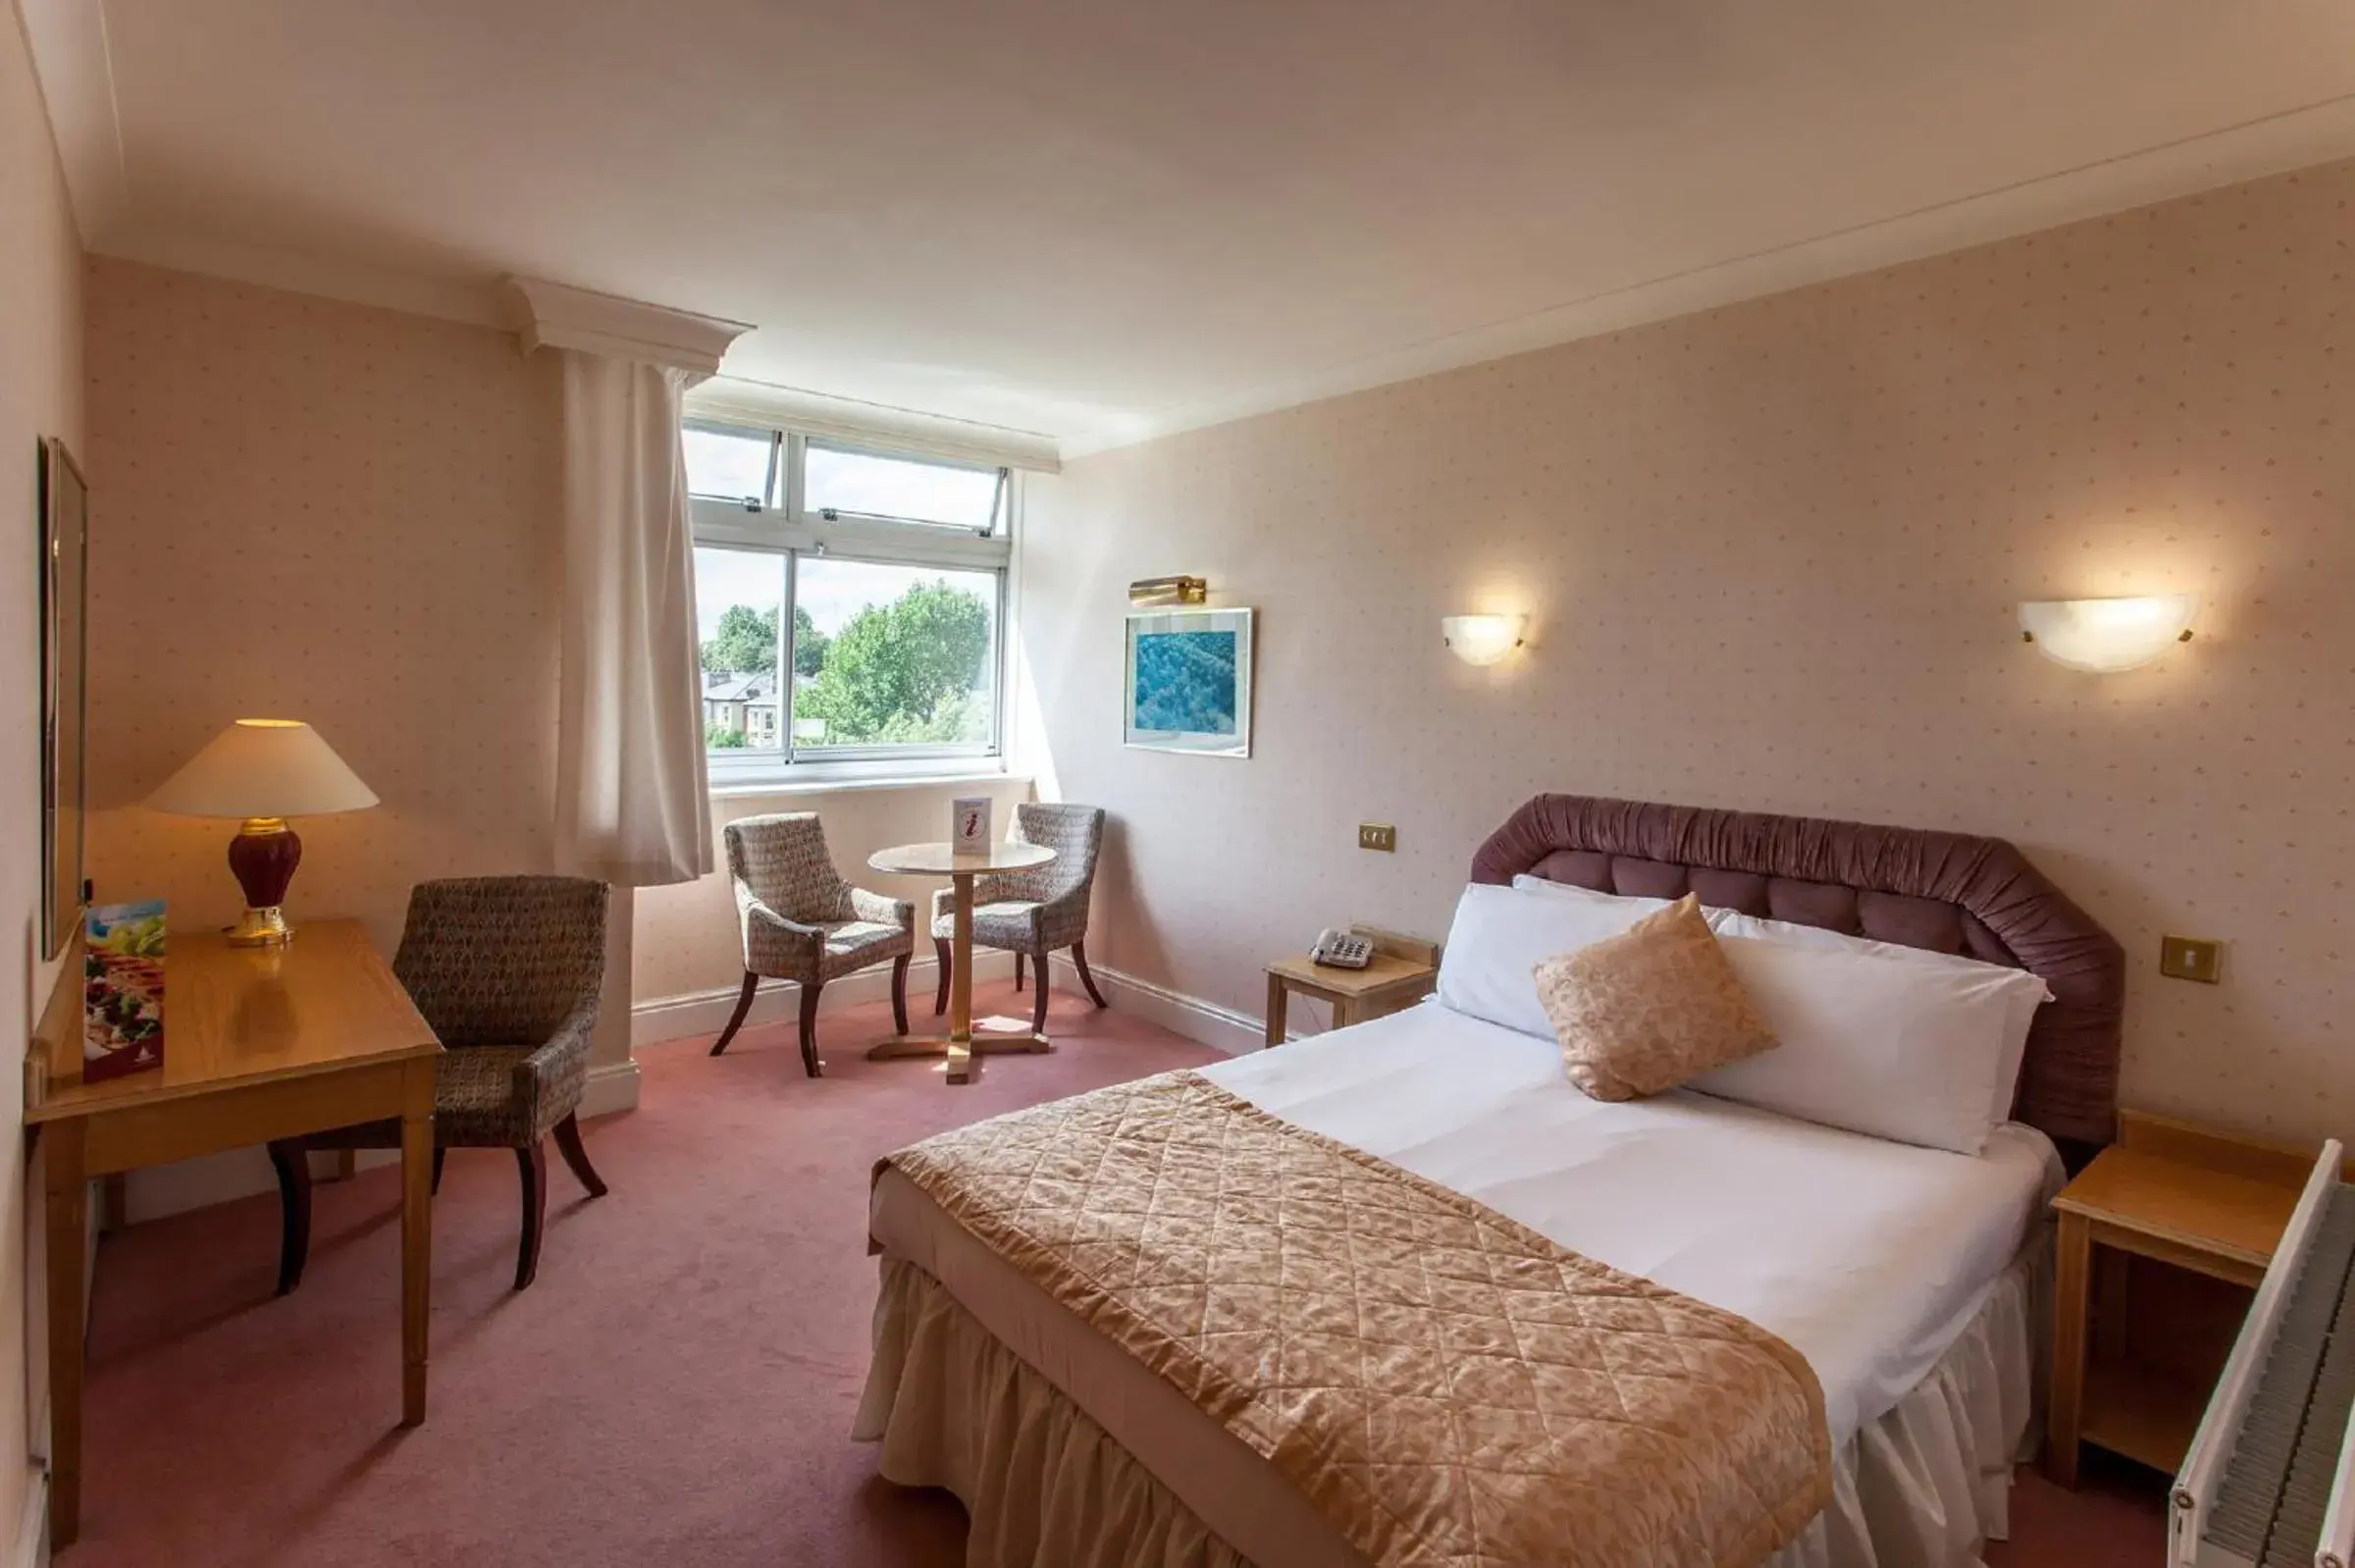 Bed, Room Photo in Britannia Hotel, Hampstead